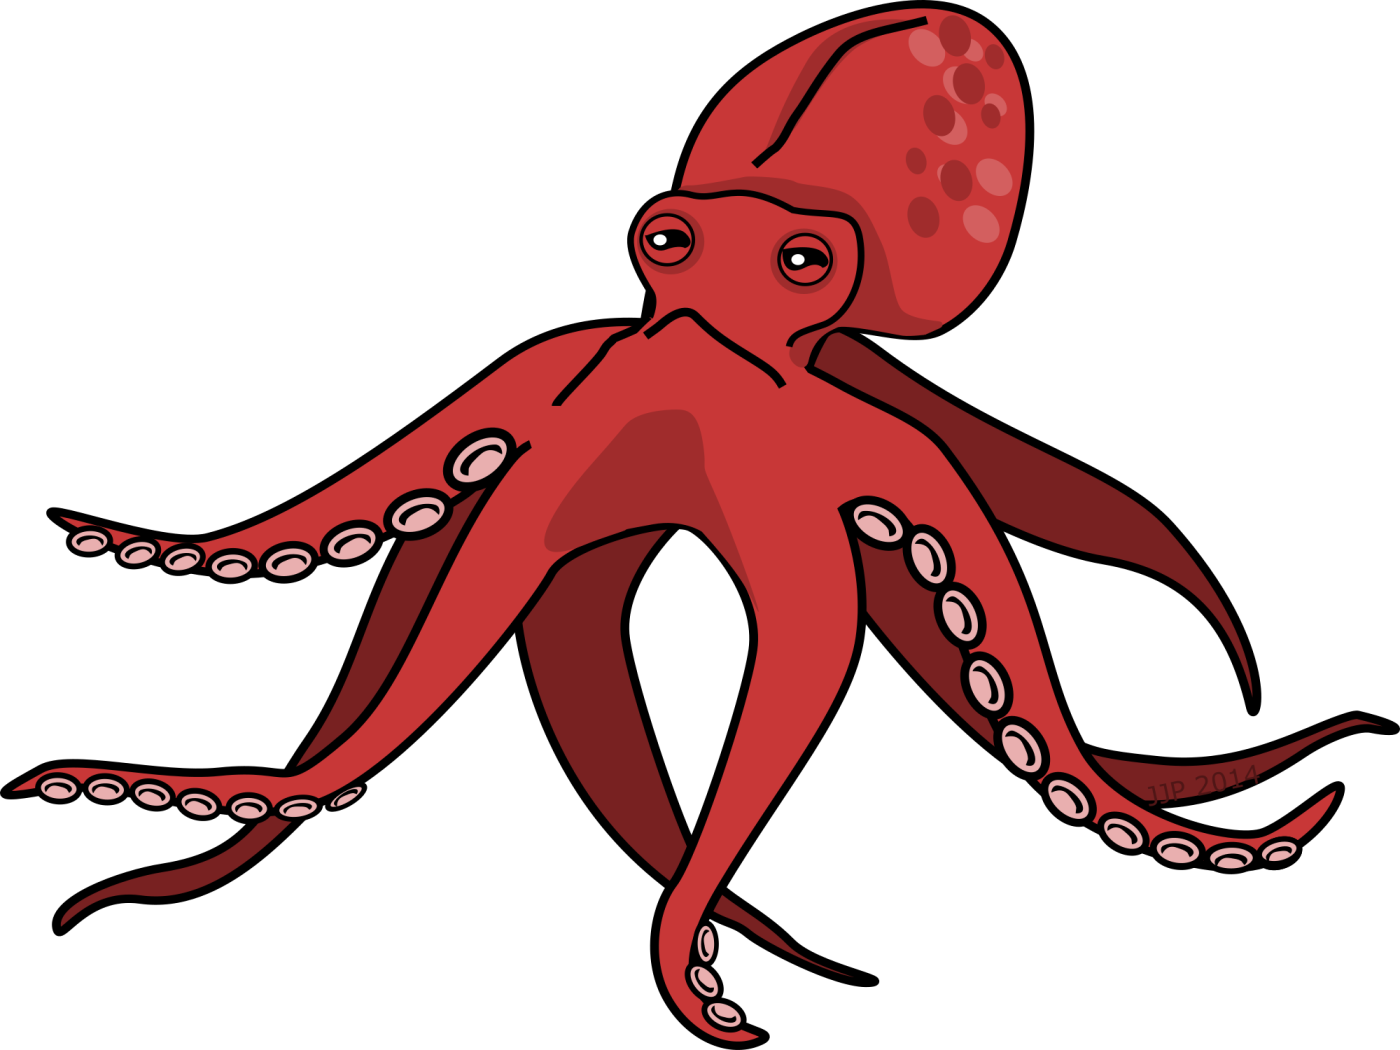 octopus-clipart-illustrations-2-octopus-clip-art-vector-image1.png